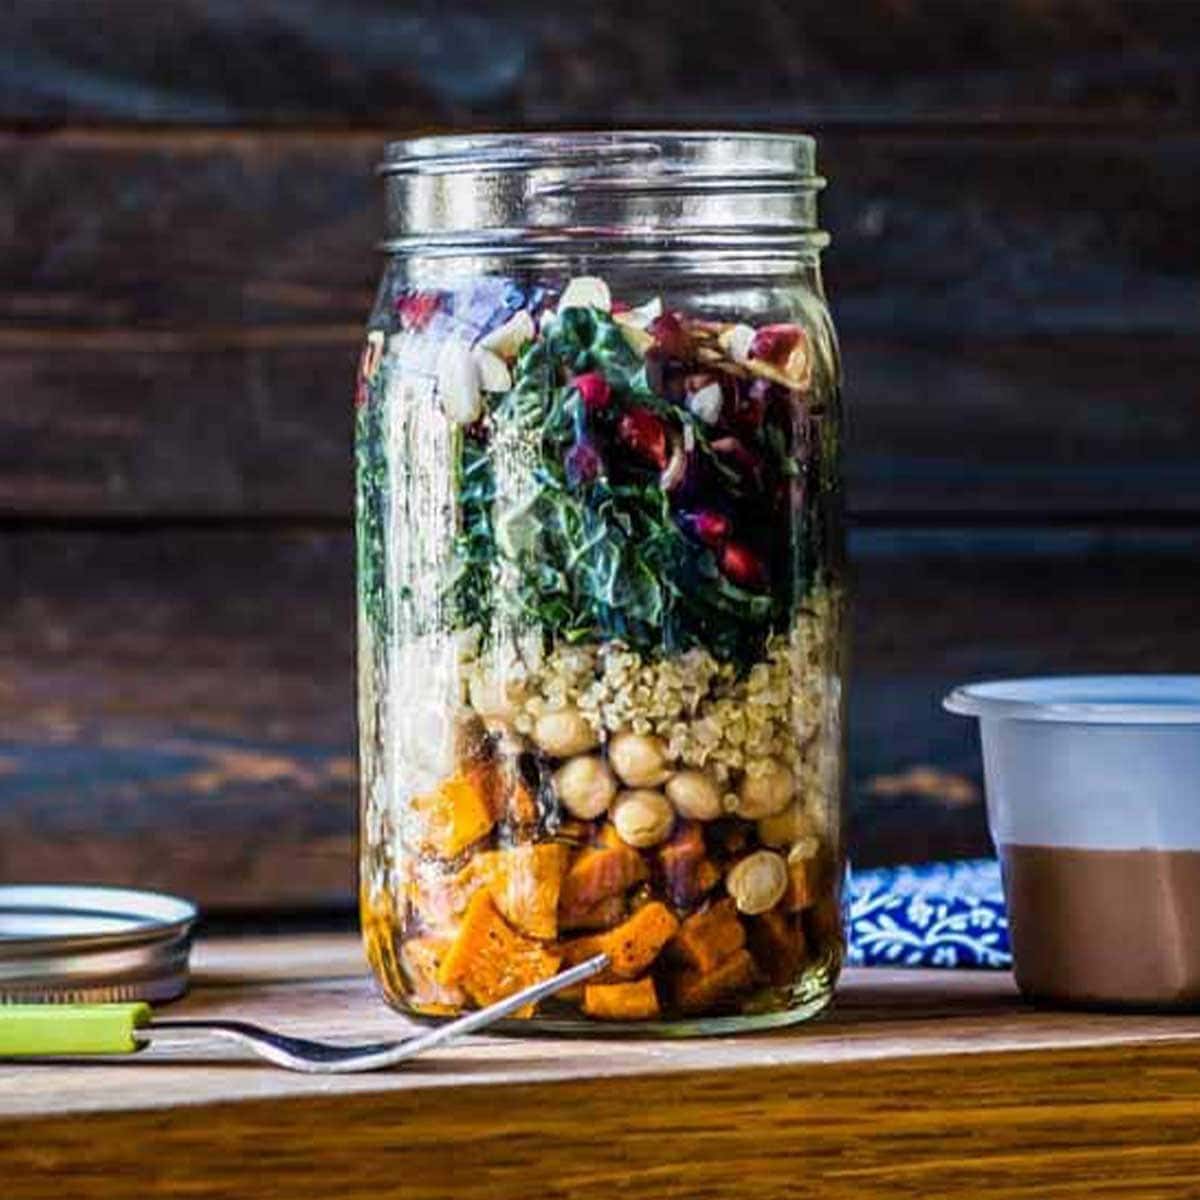 https://simplegreensmoothies.com/wp-content/uploads/Mason-jar-salad-mason-jar-salad-recipes-pomegranate-salad-kale-salad-quinoa-chickpeas-vegan-gluten-free-dairy-free-plant-based-featured.jpg